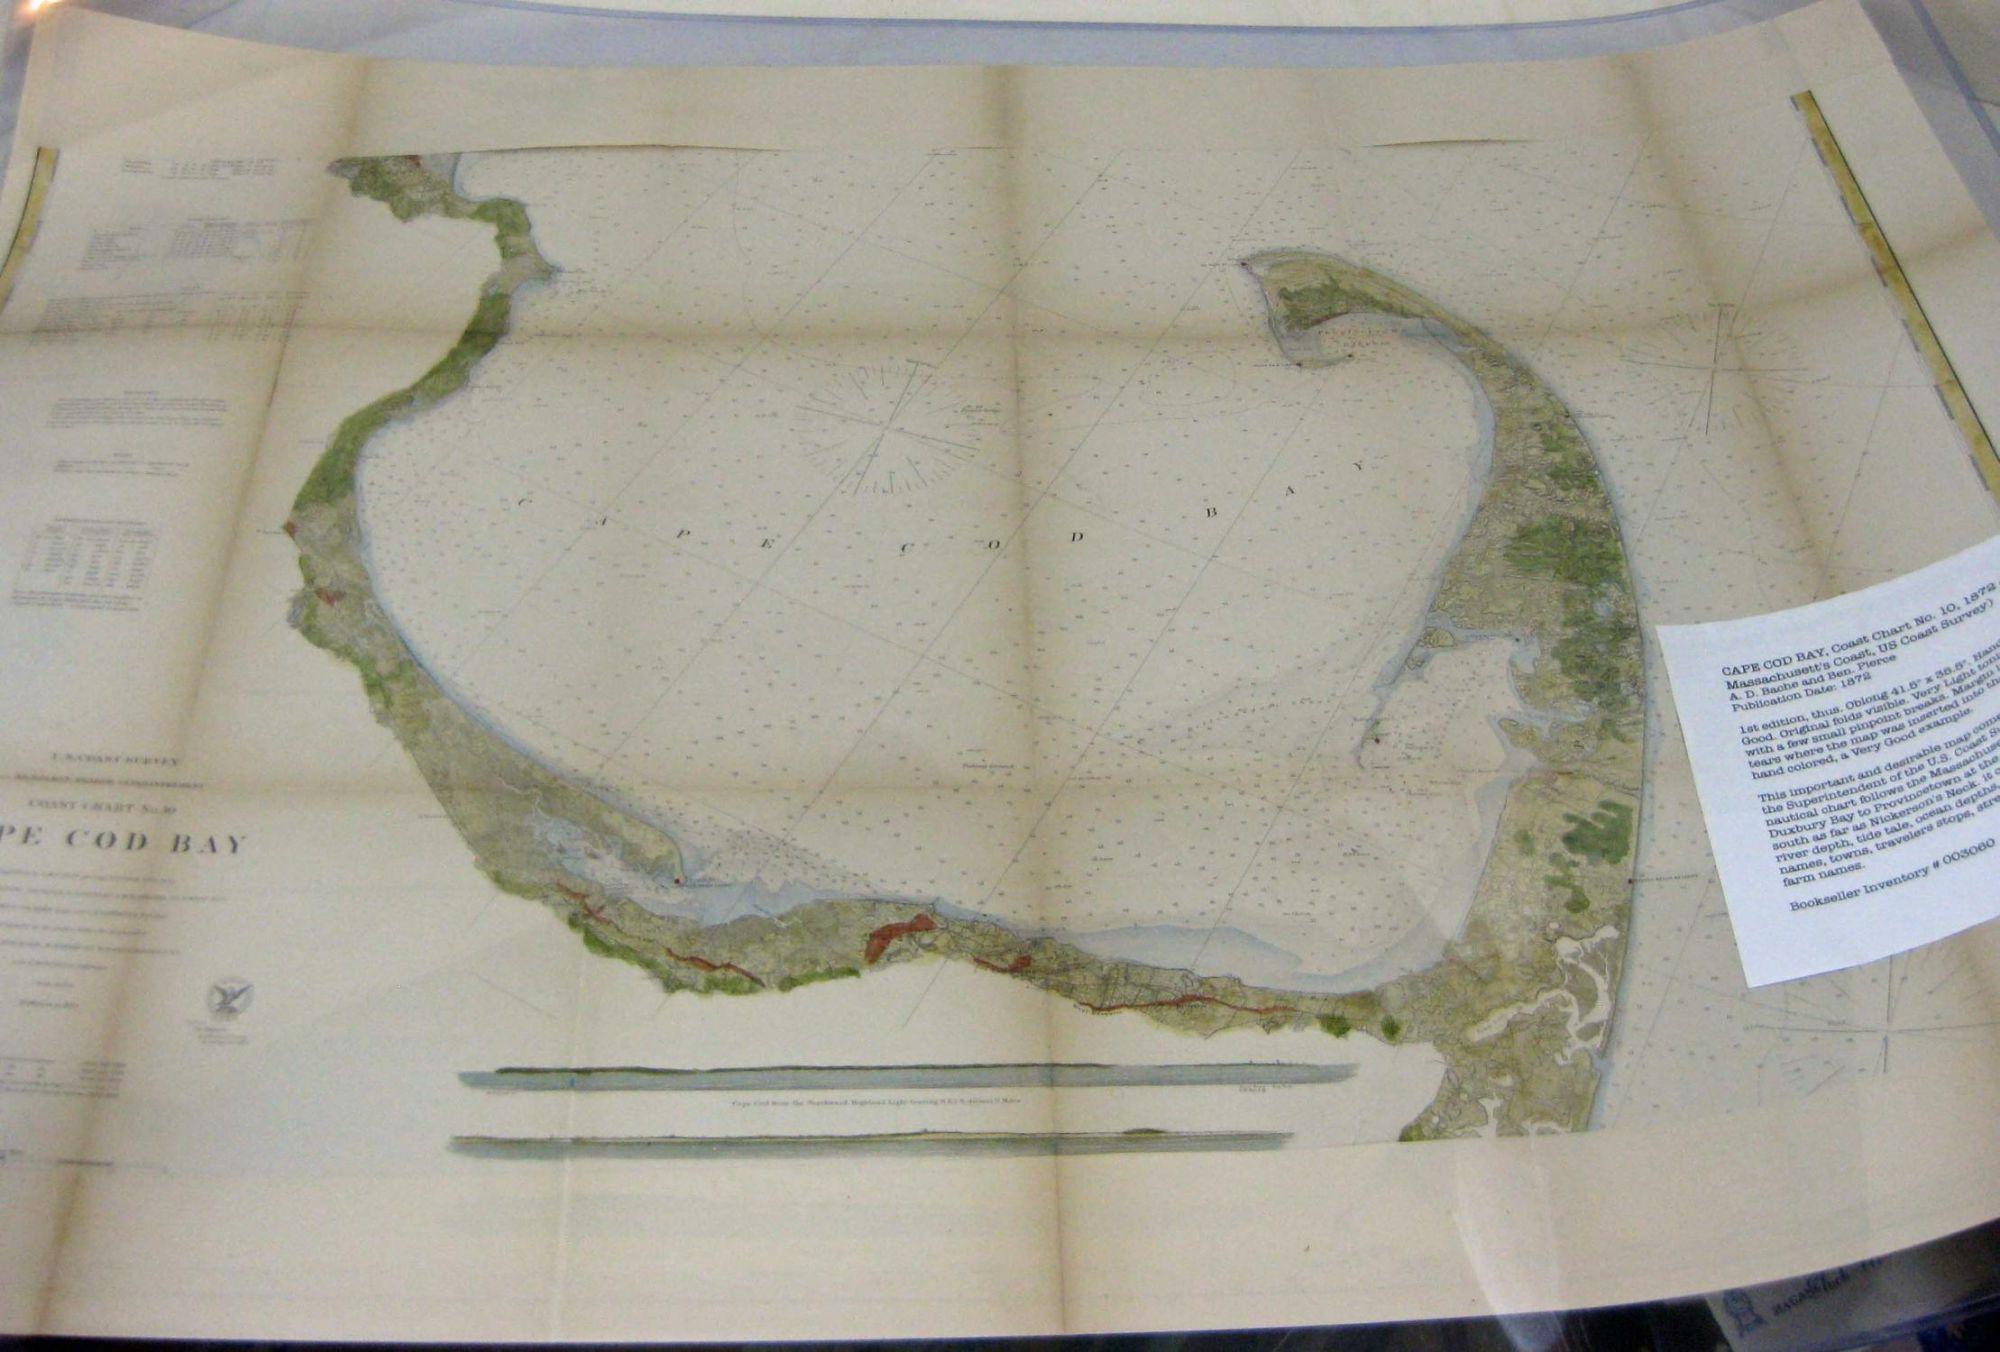 Cape Cod Bay Depth Chart